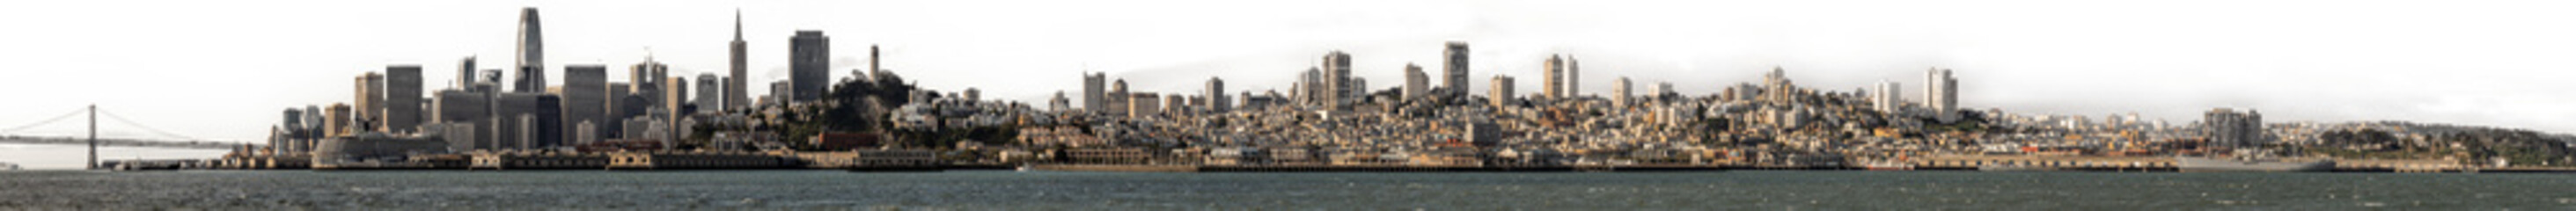 San Francisco Skyline with transparent sky - 568500931